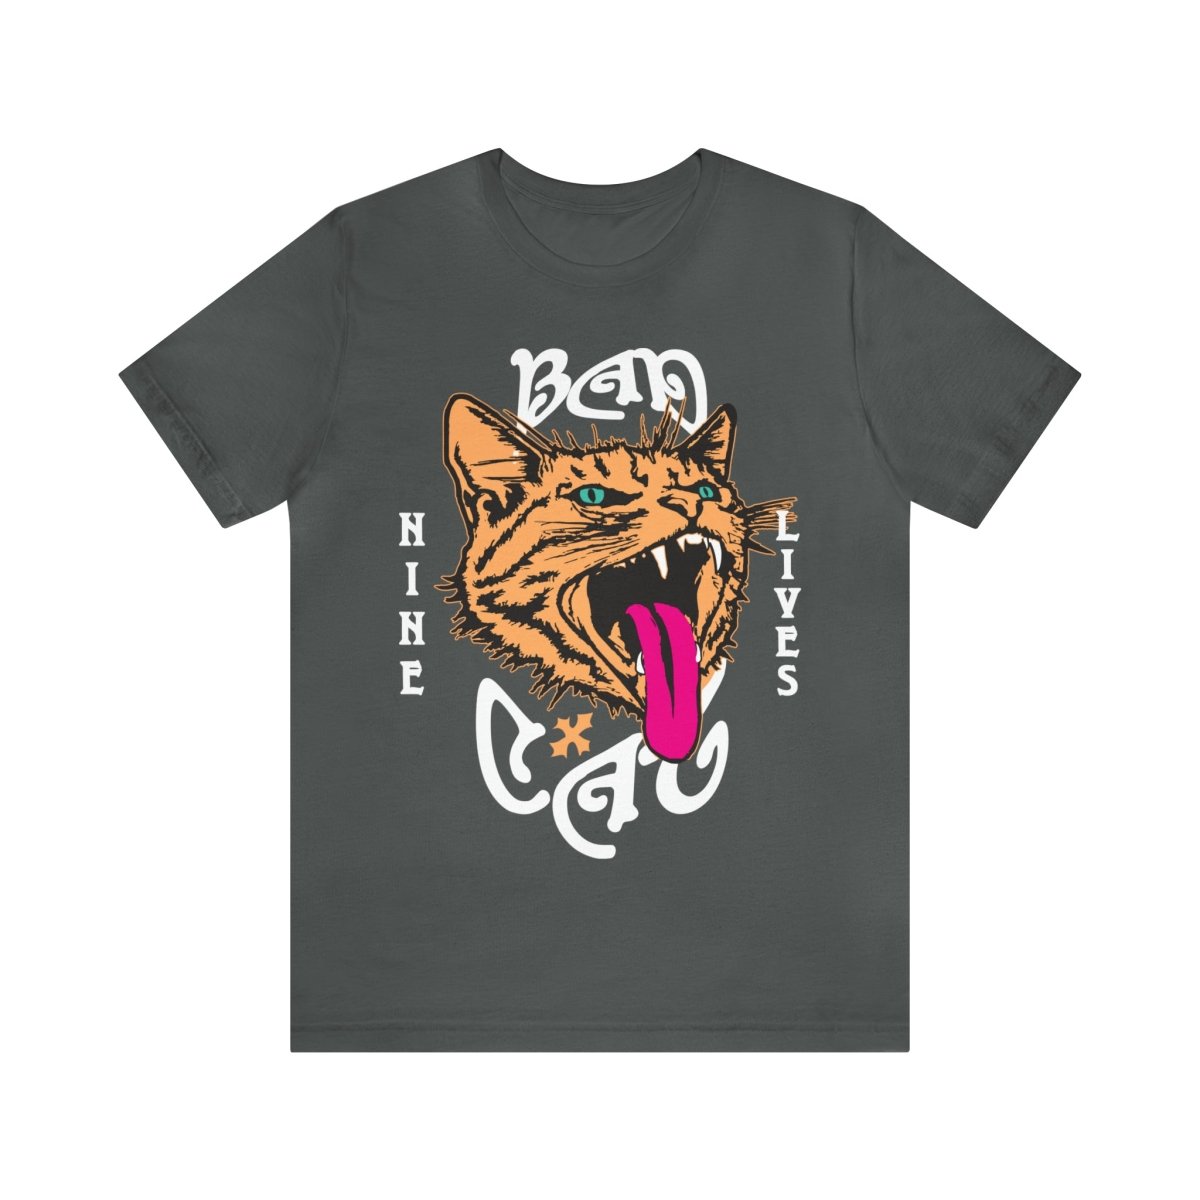 Bad Cat Premium T-Shirt, Nine Lives Lucky